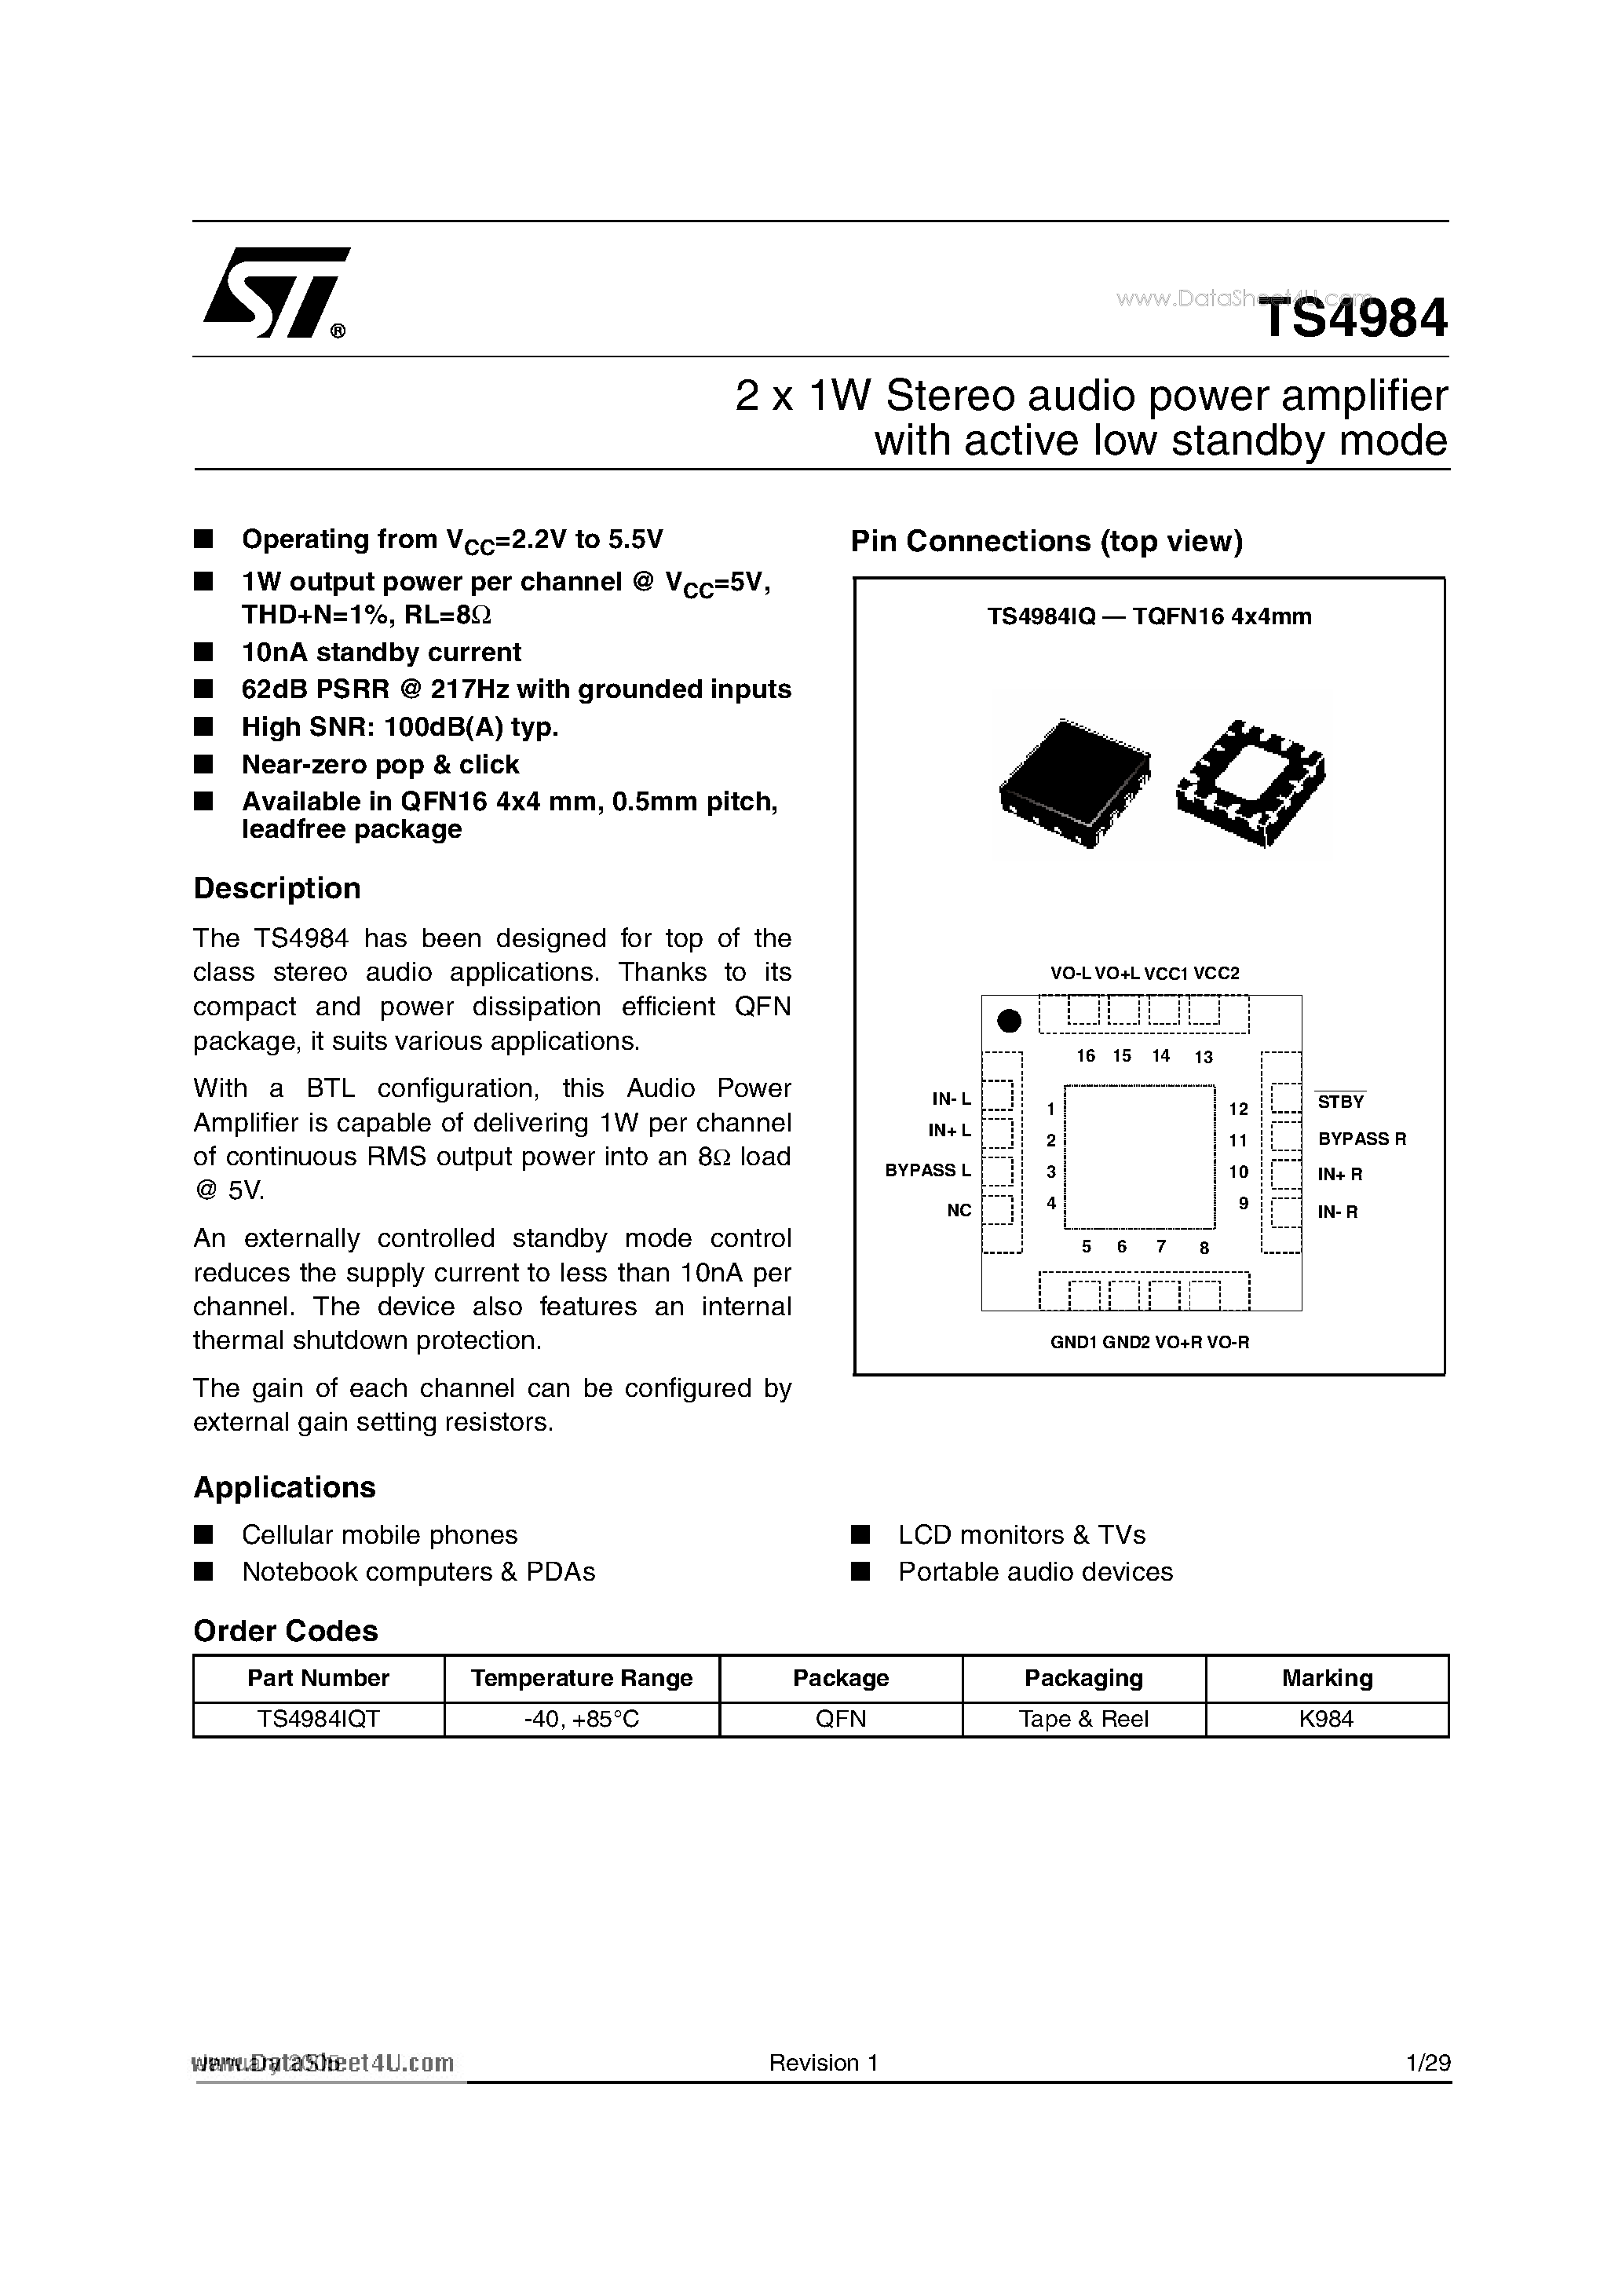 Datasheet TS4984 - 2 x 1W Stereo audio power amplifier page 1